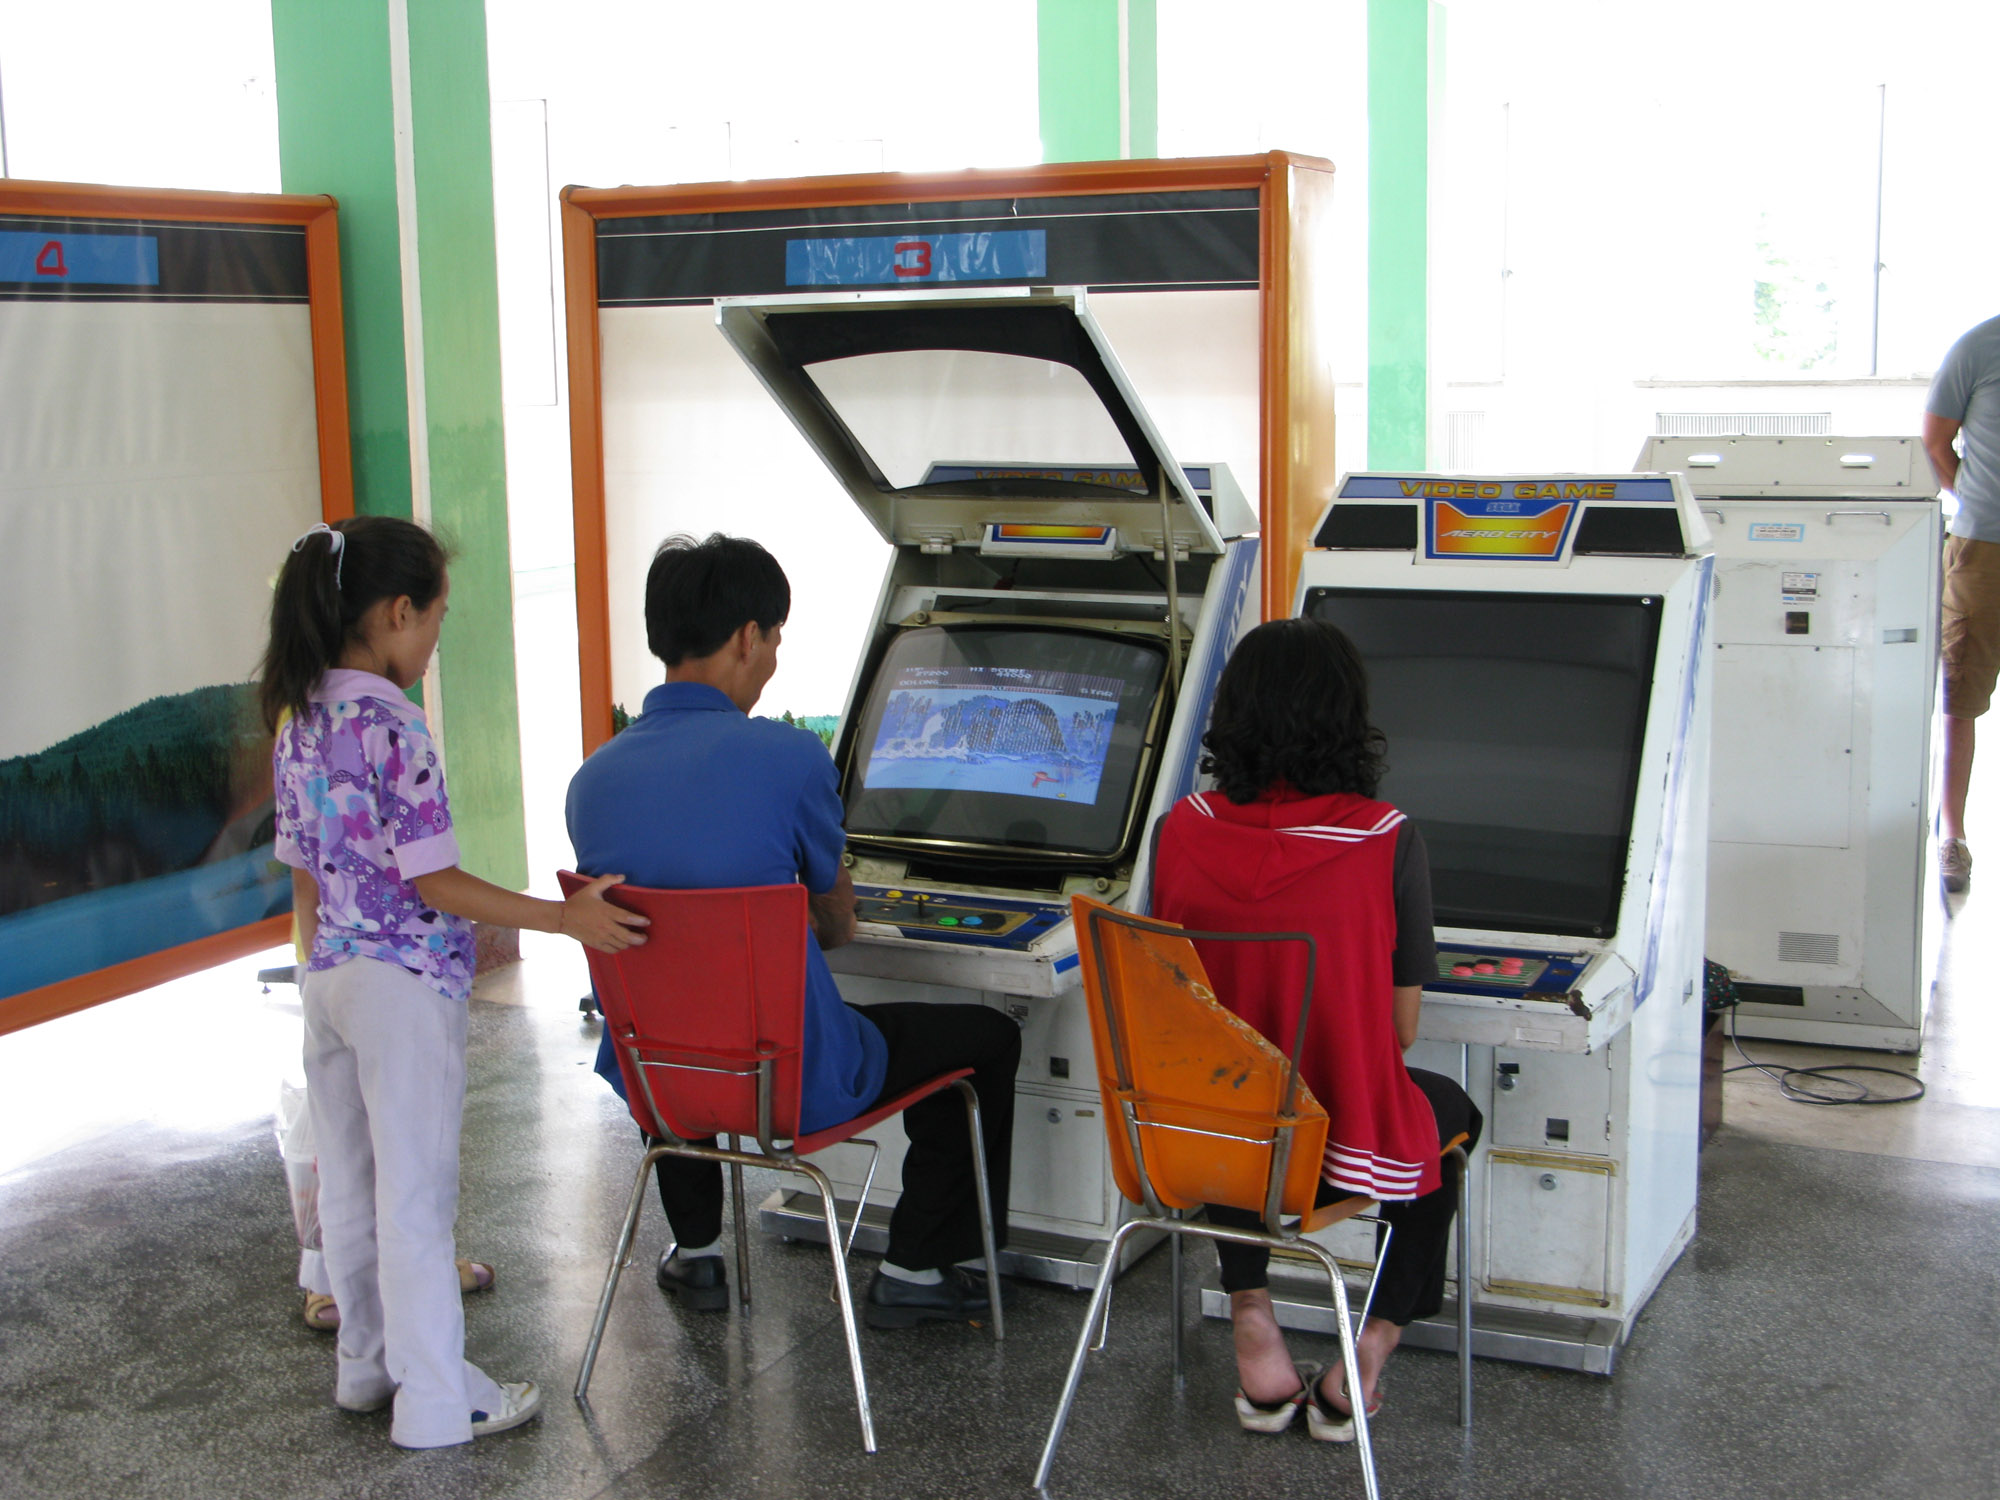 This North Korean Arcade Propaganda, My Goodness